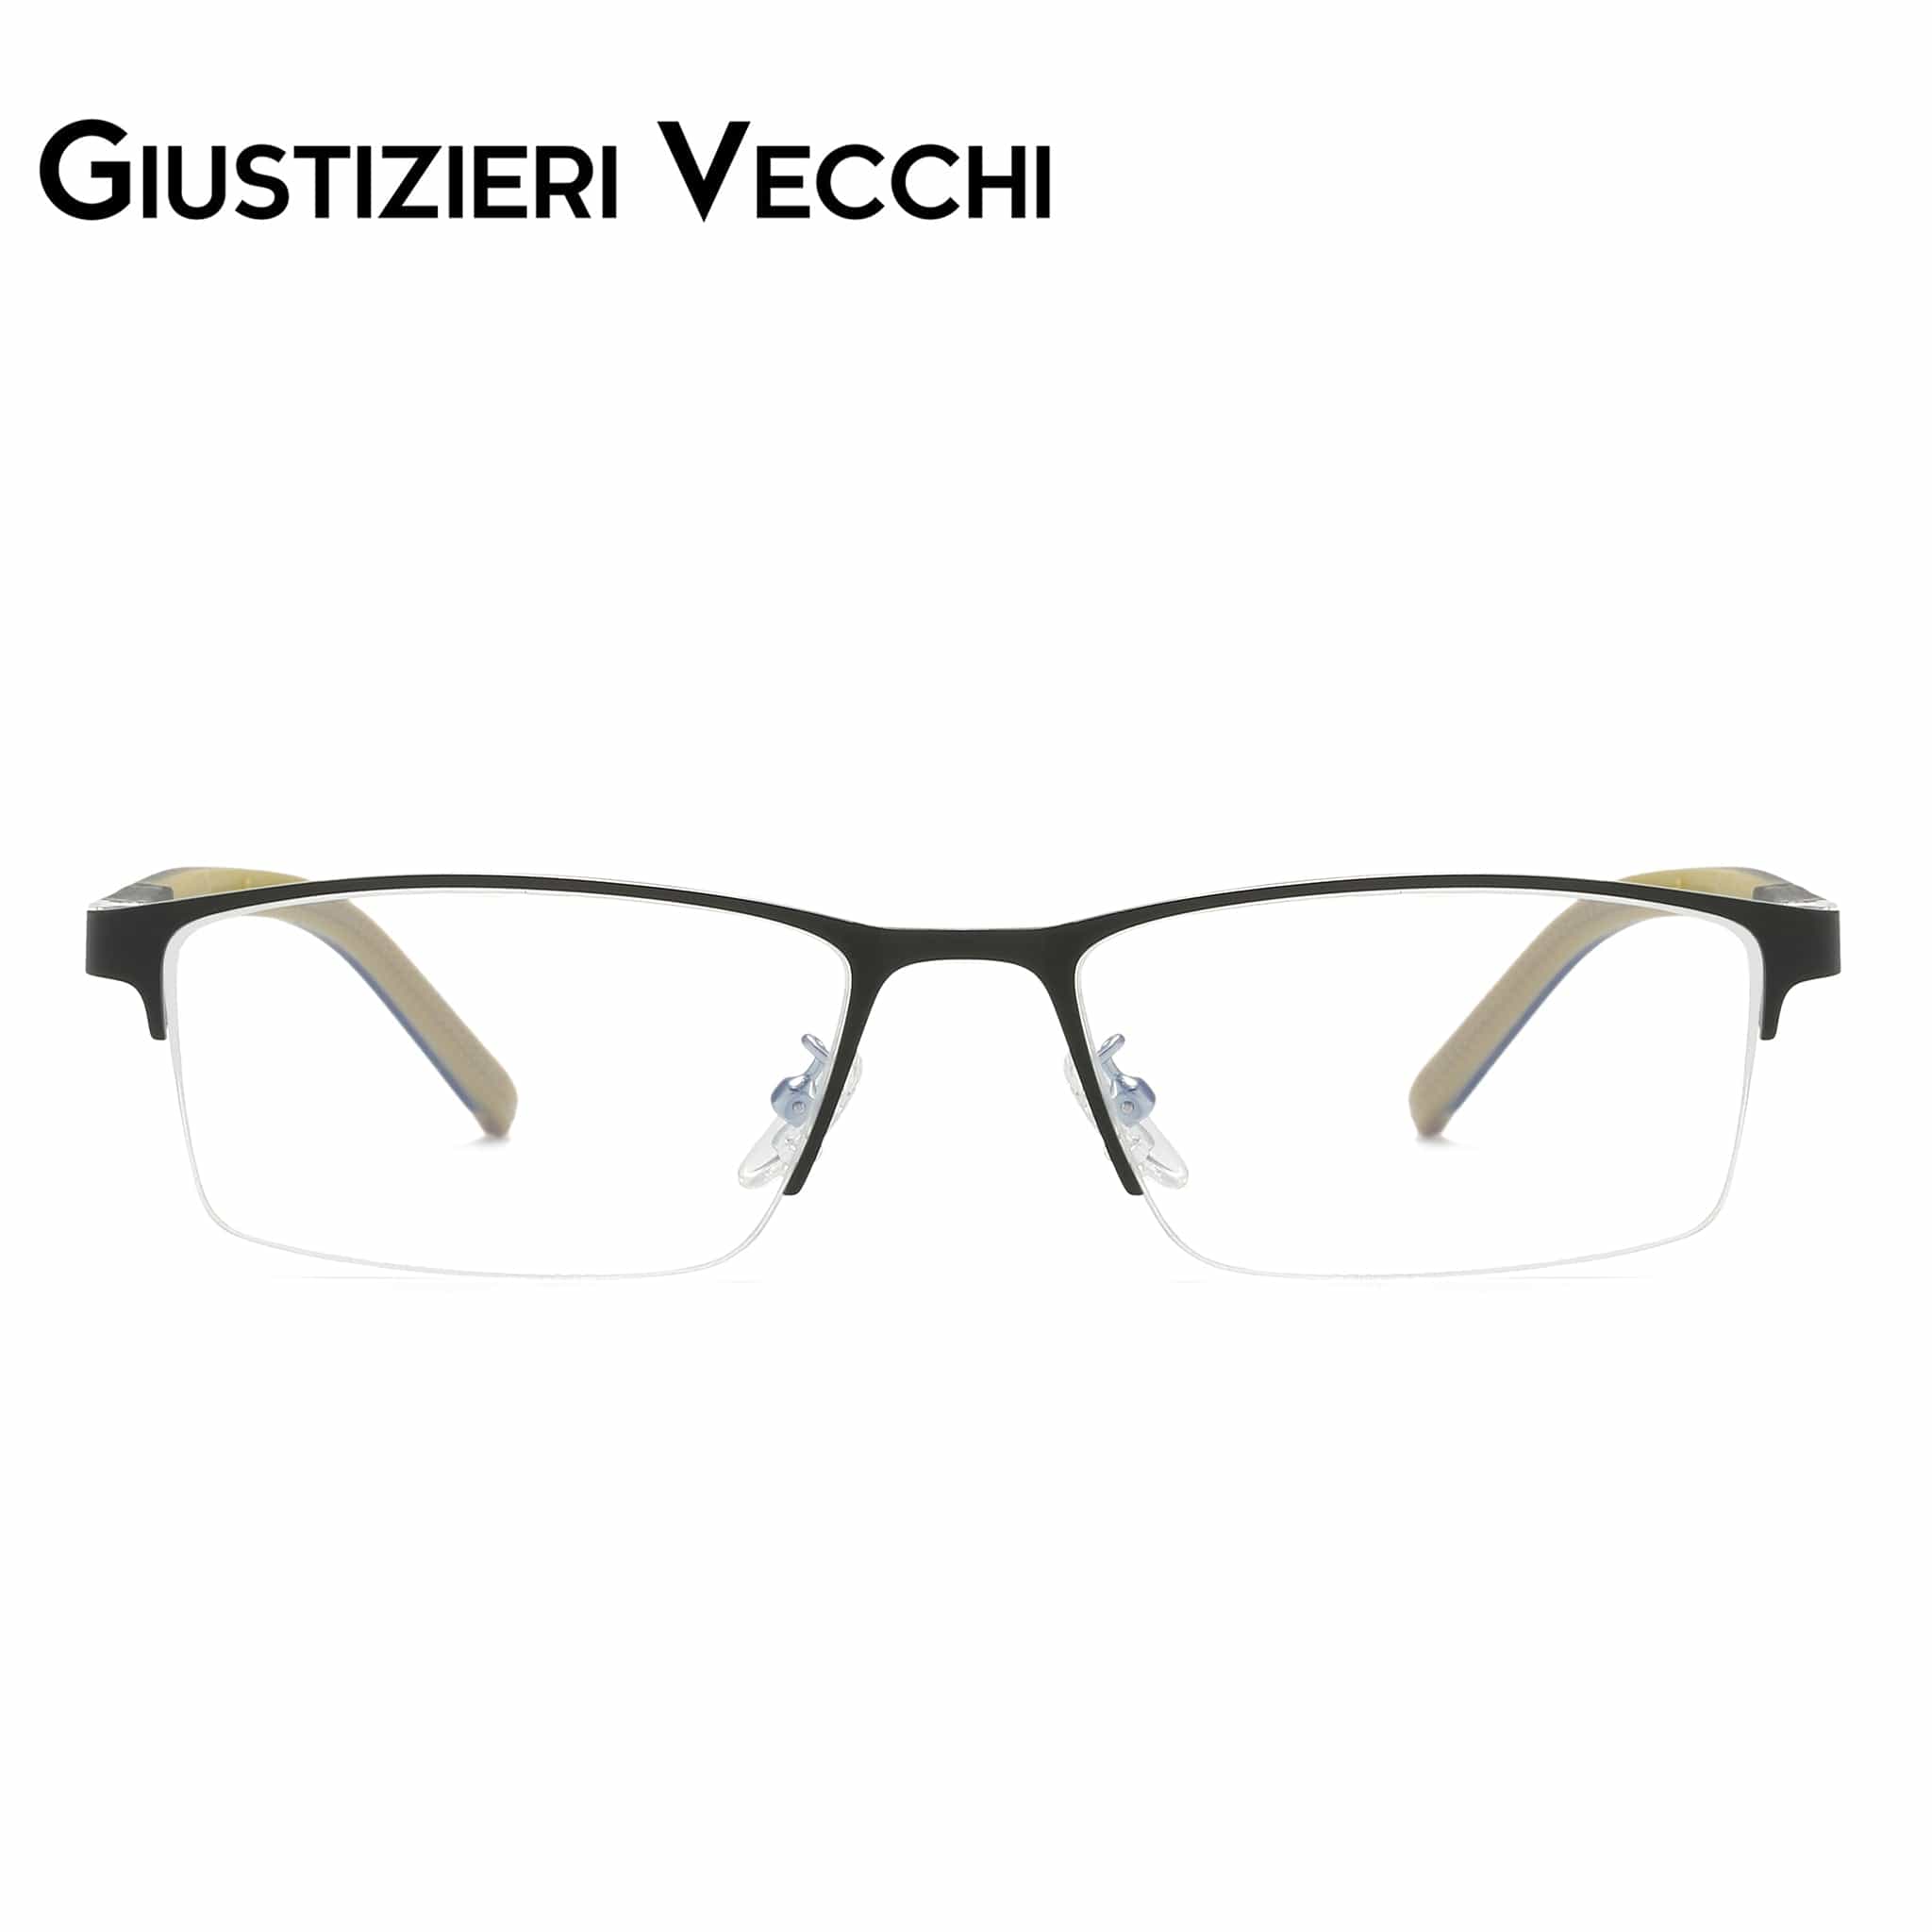 GIUSTIZIERI VECCHI Eyeglasses Large / Black with Olive Green HydroFlash Duo